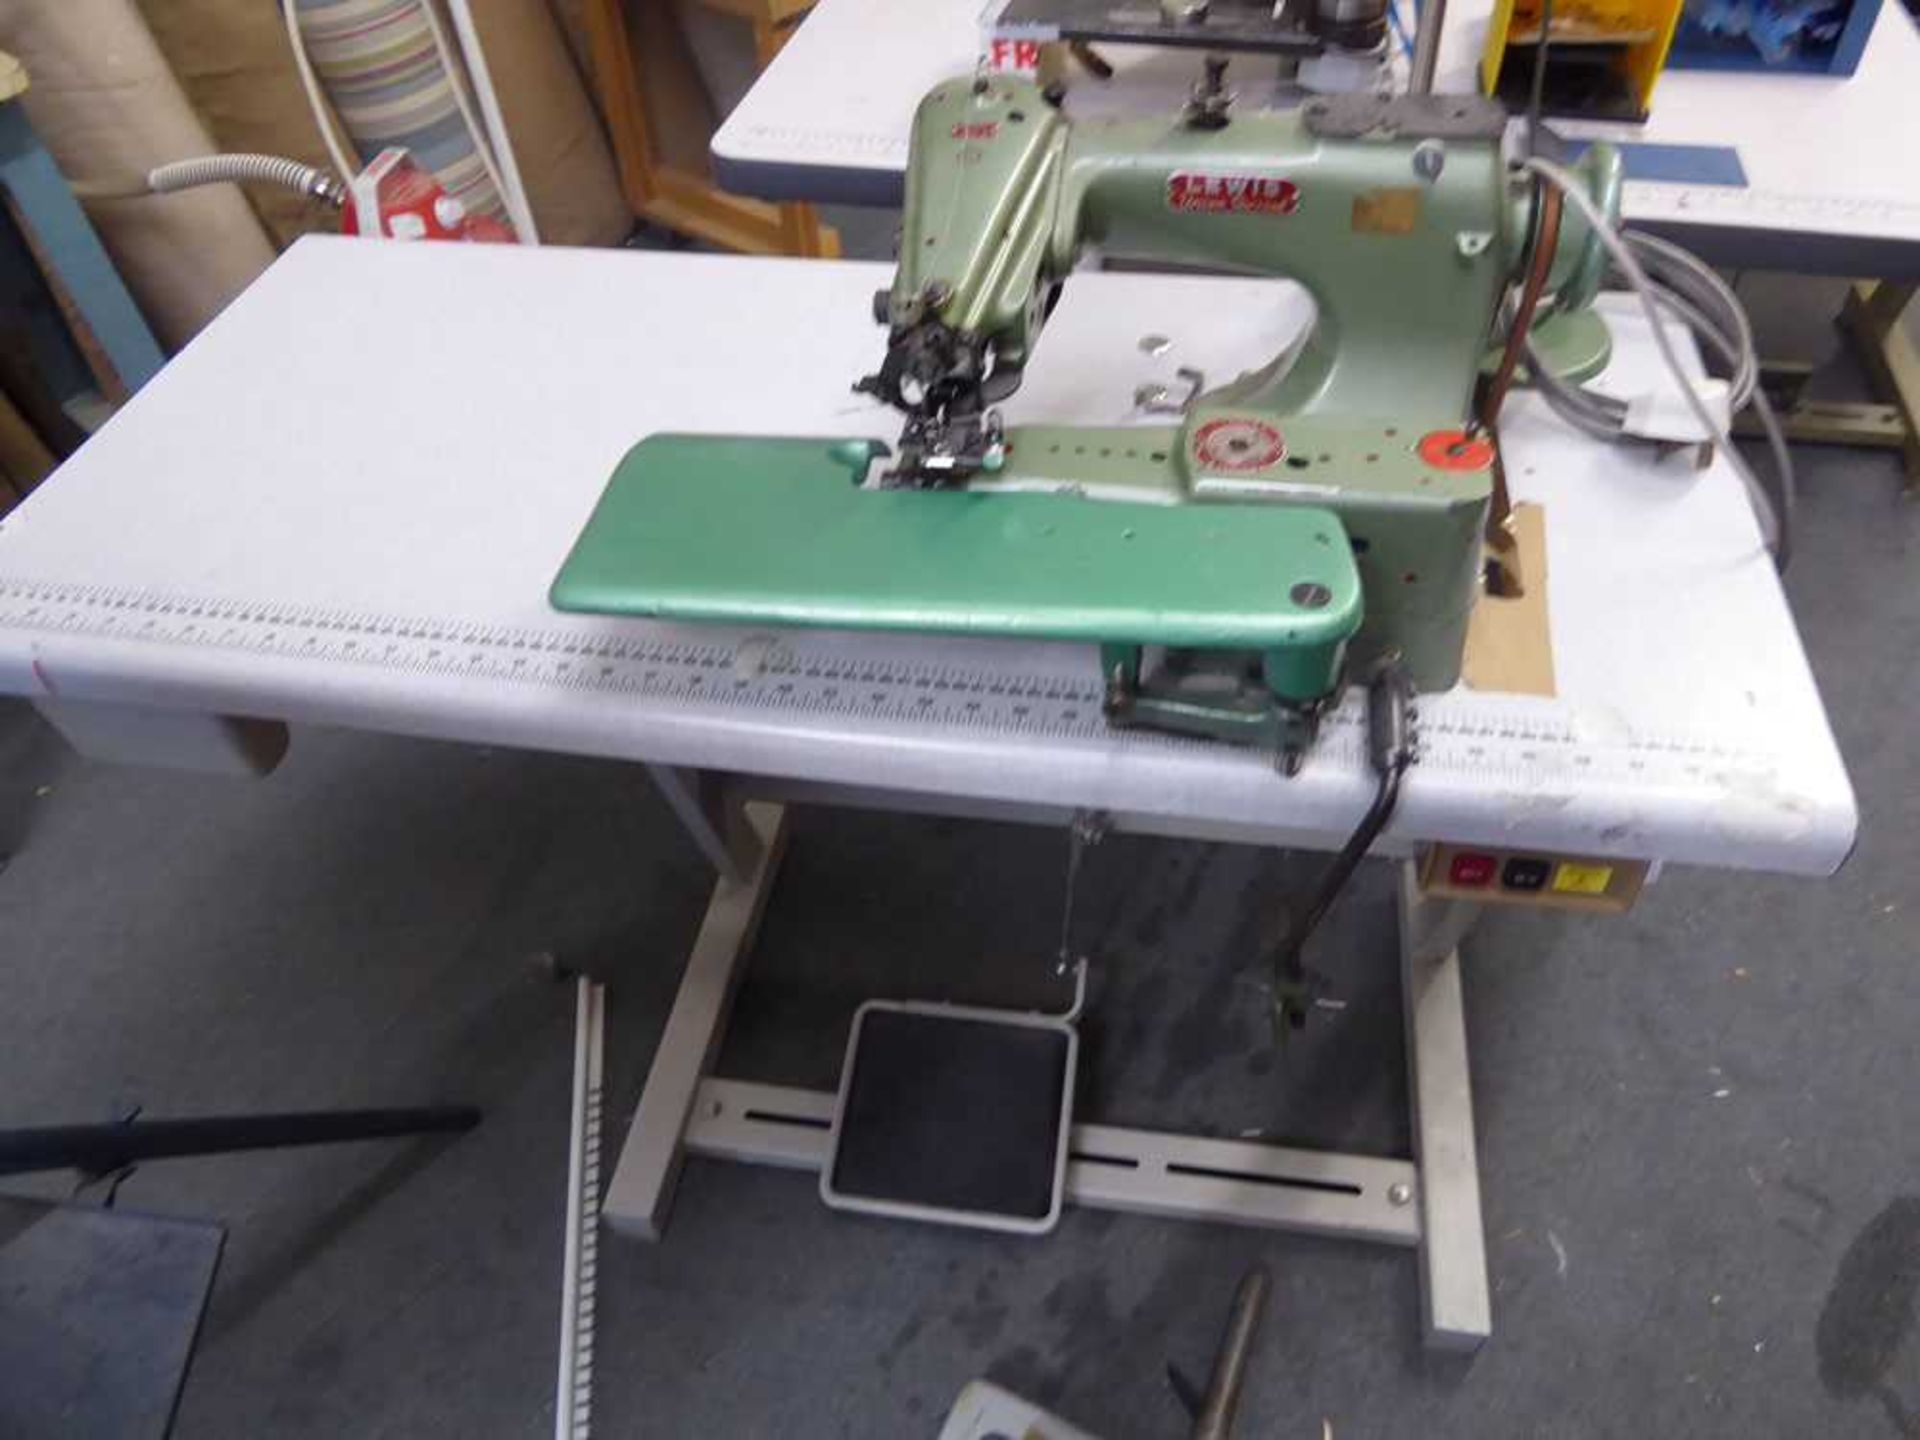 +VAT Lewis Union Special model: 150/2 blind hemmer/felling industrial sewing machine - single